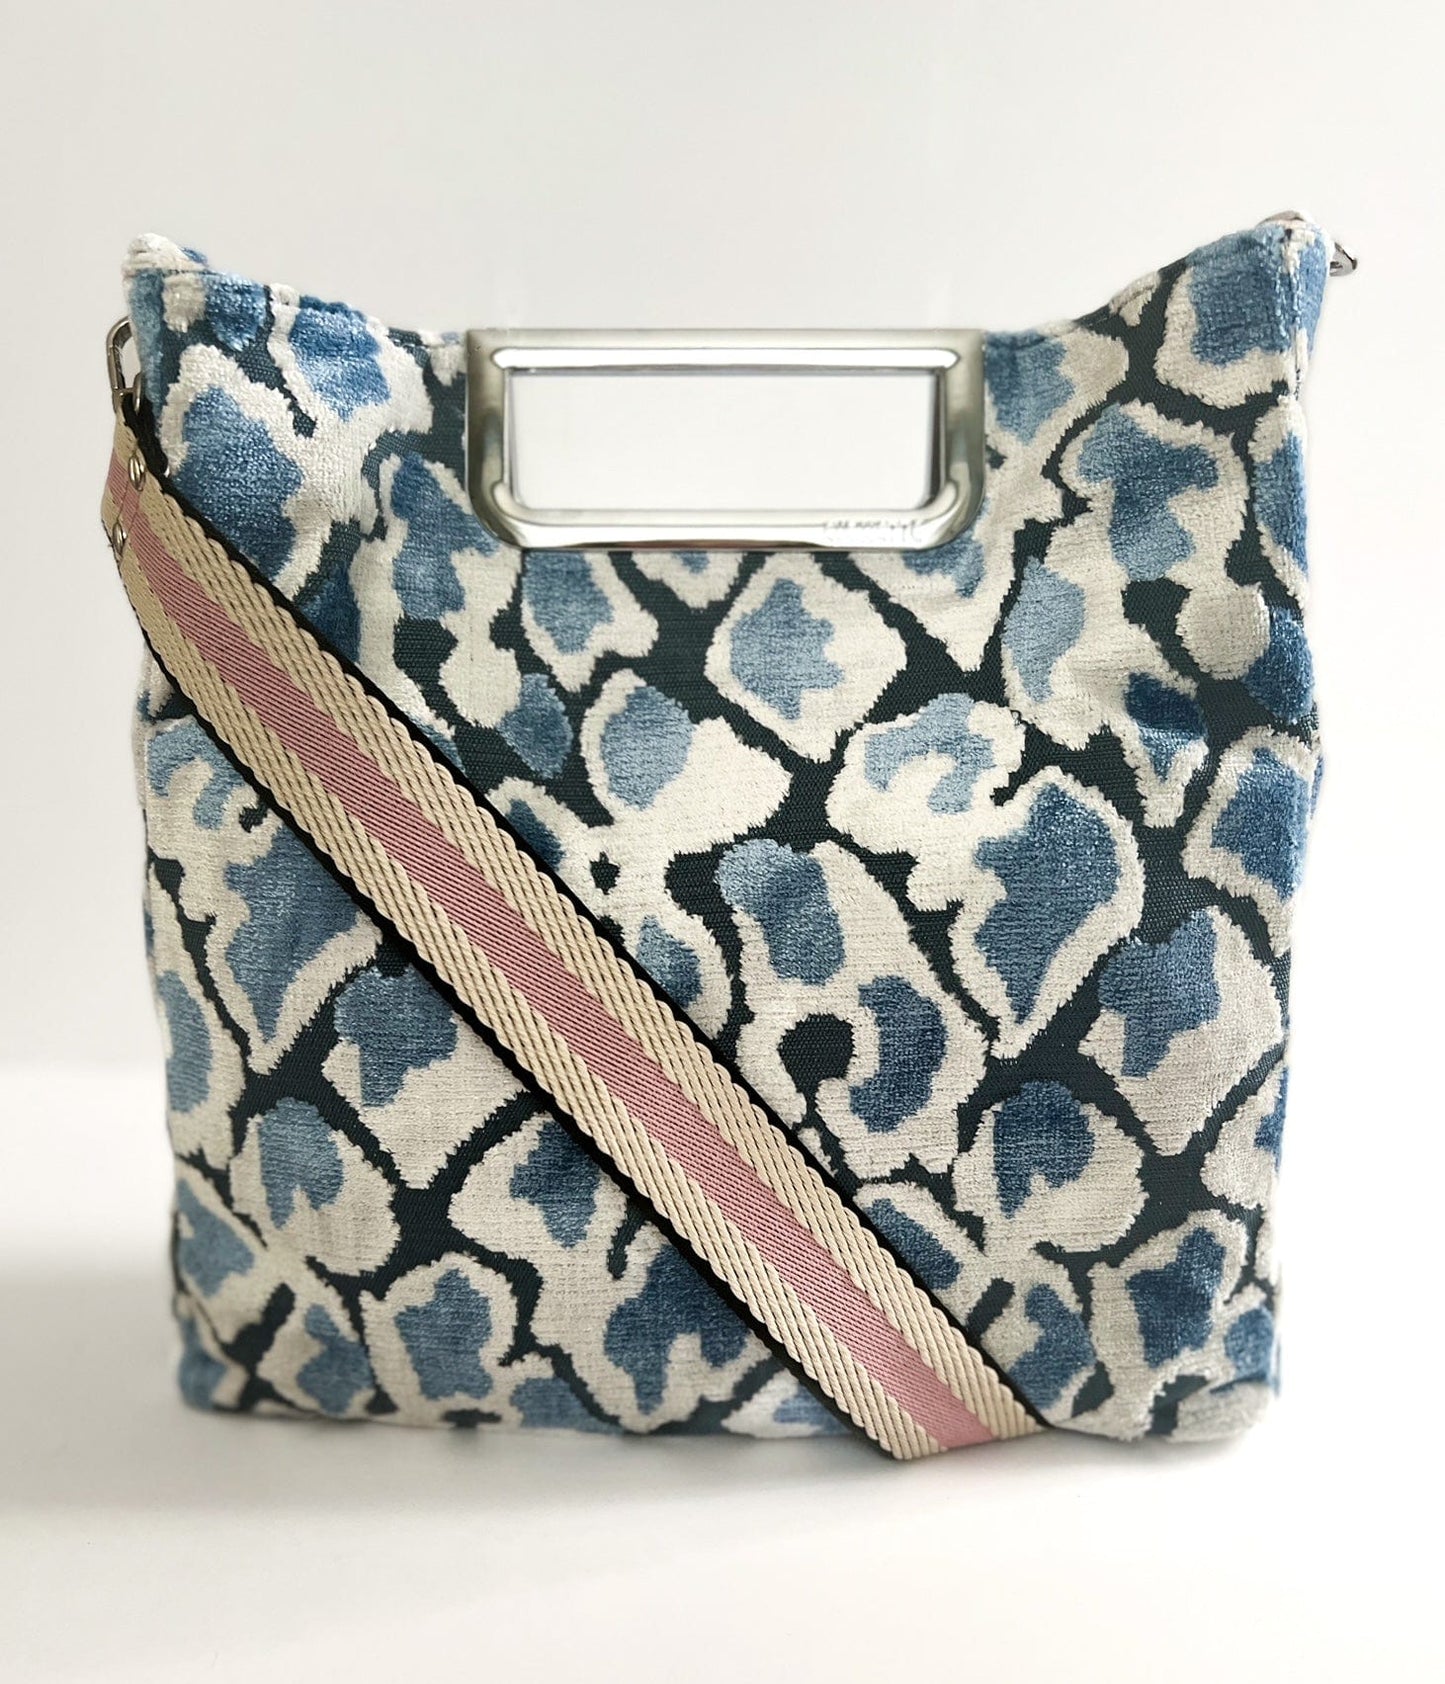 Blue leopard Jane crossbody handbag - Shiny chrome hardware